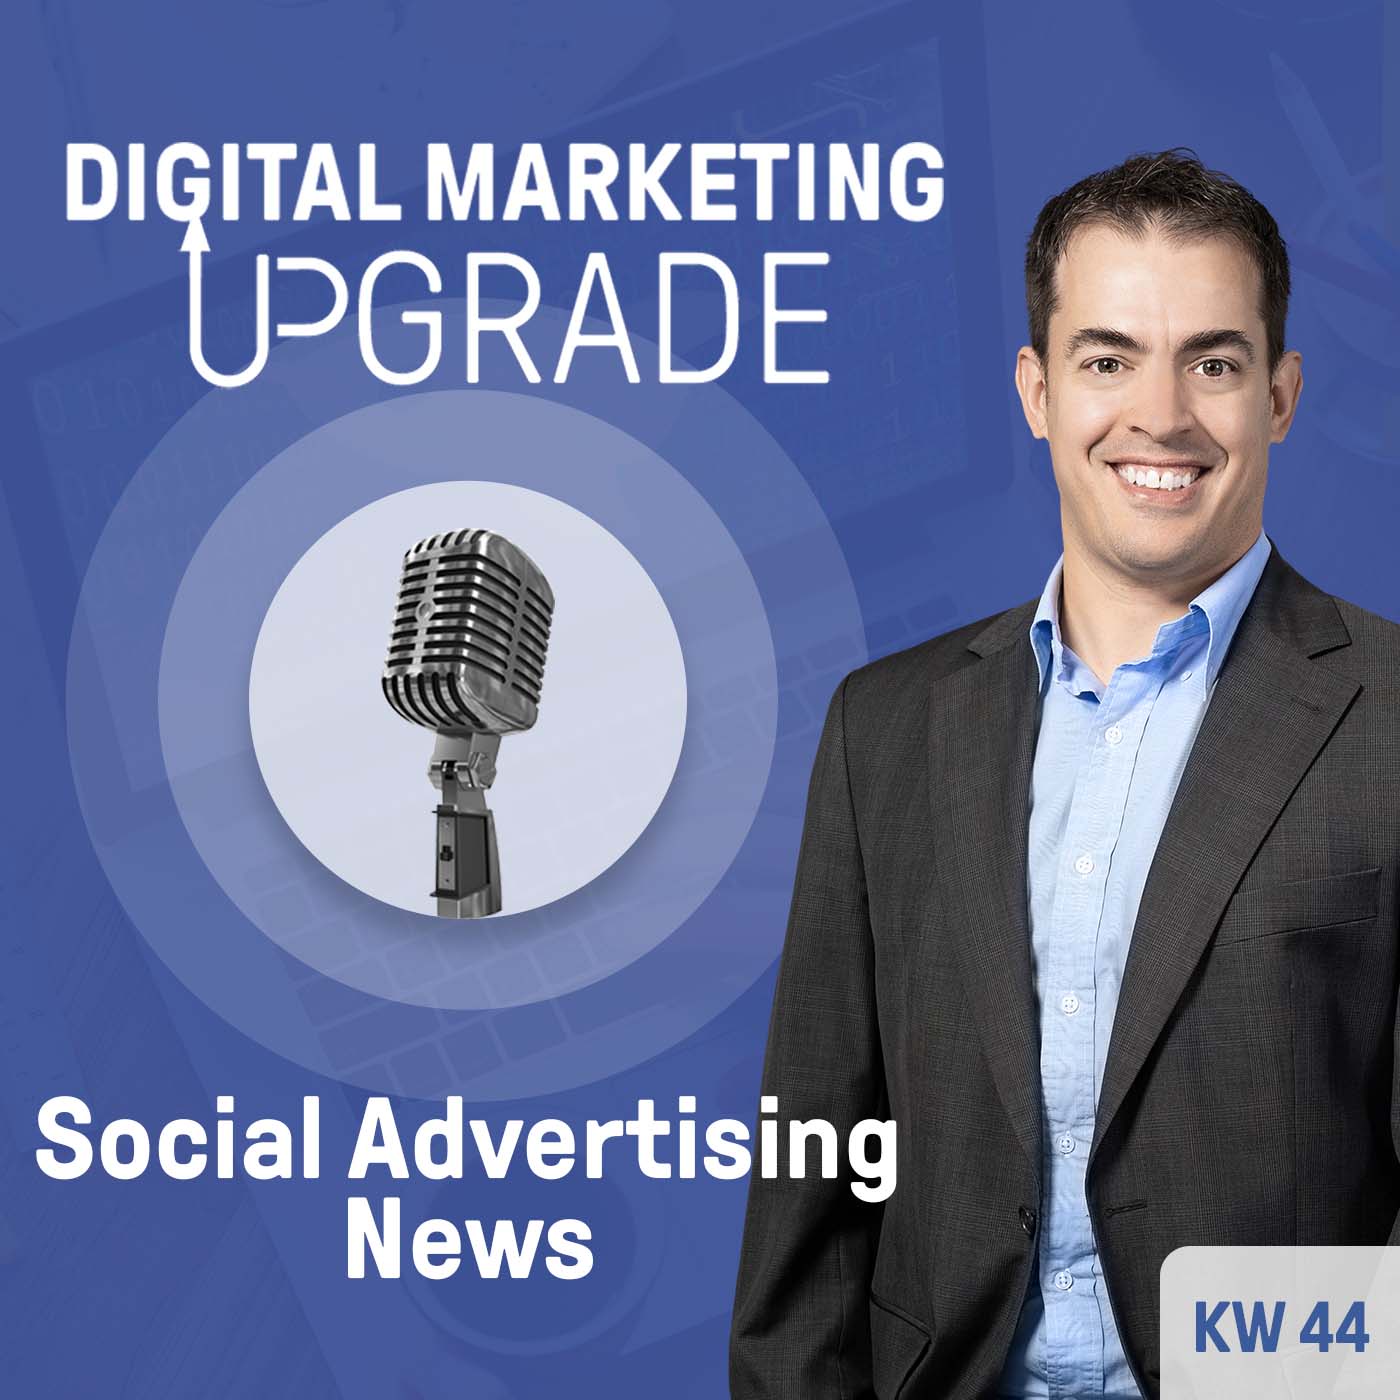 Social Advertising News - KW 44/23